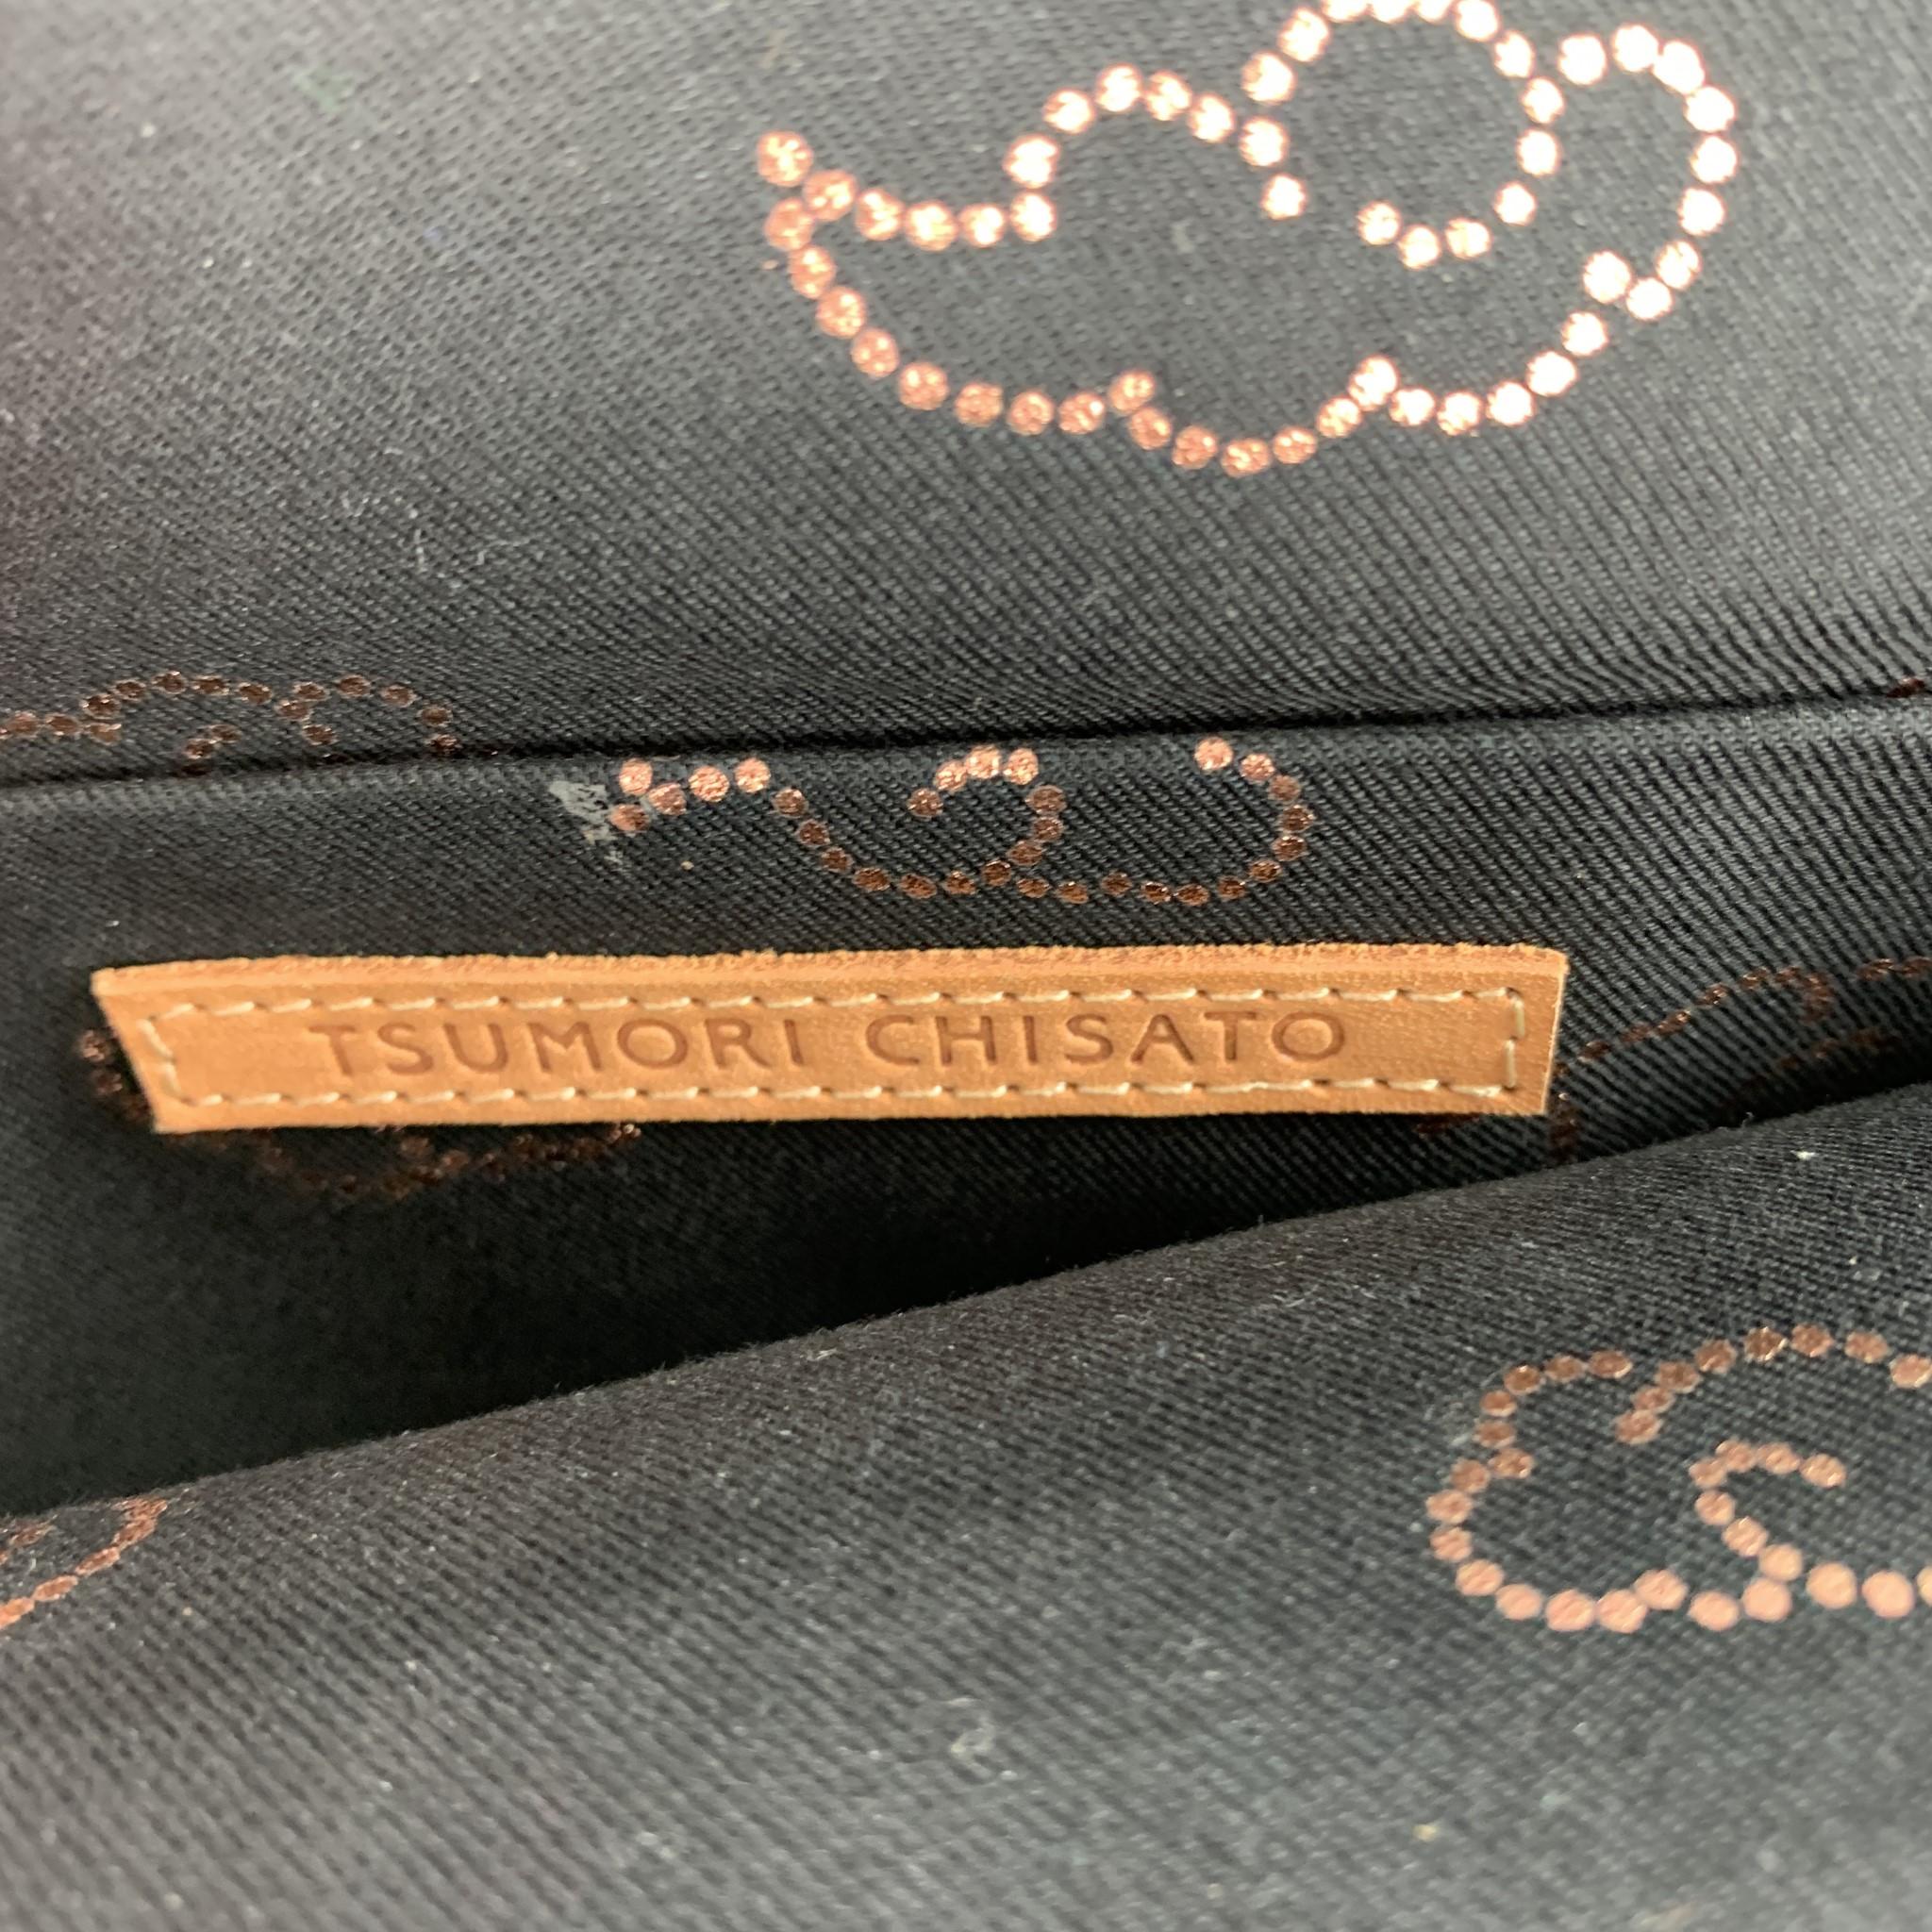 TSUMORI CHISATO Gold Copper Print Leather Goat Hair Trim Kiss Lock Bag In Good Condition In San Francisco, CA